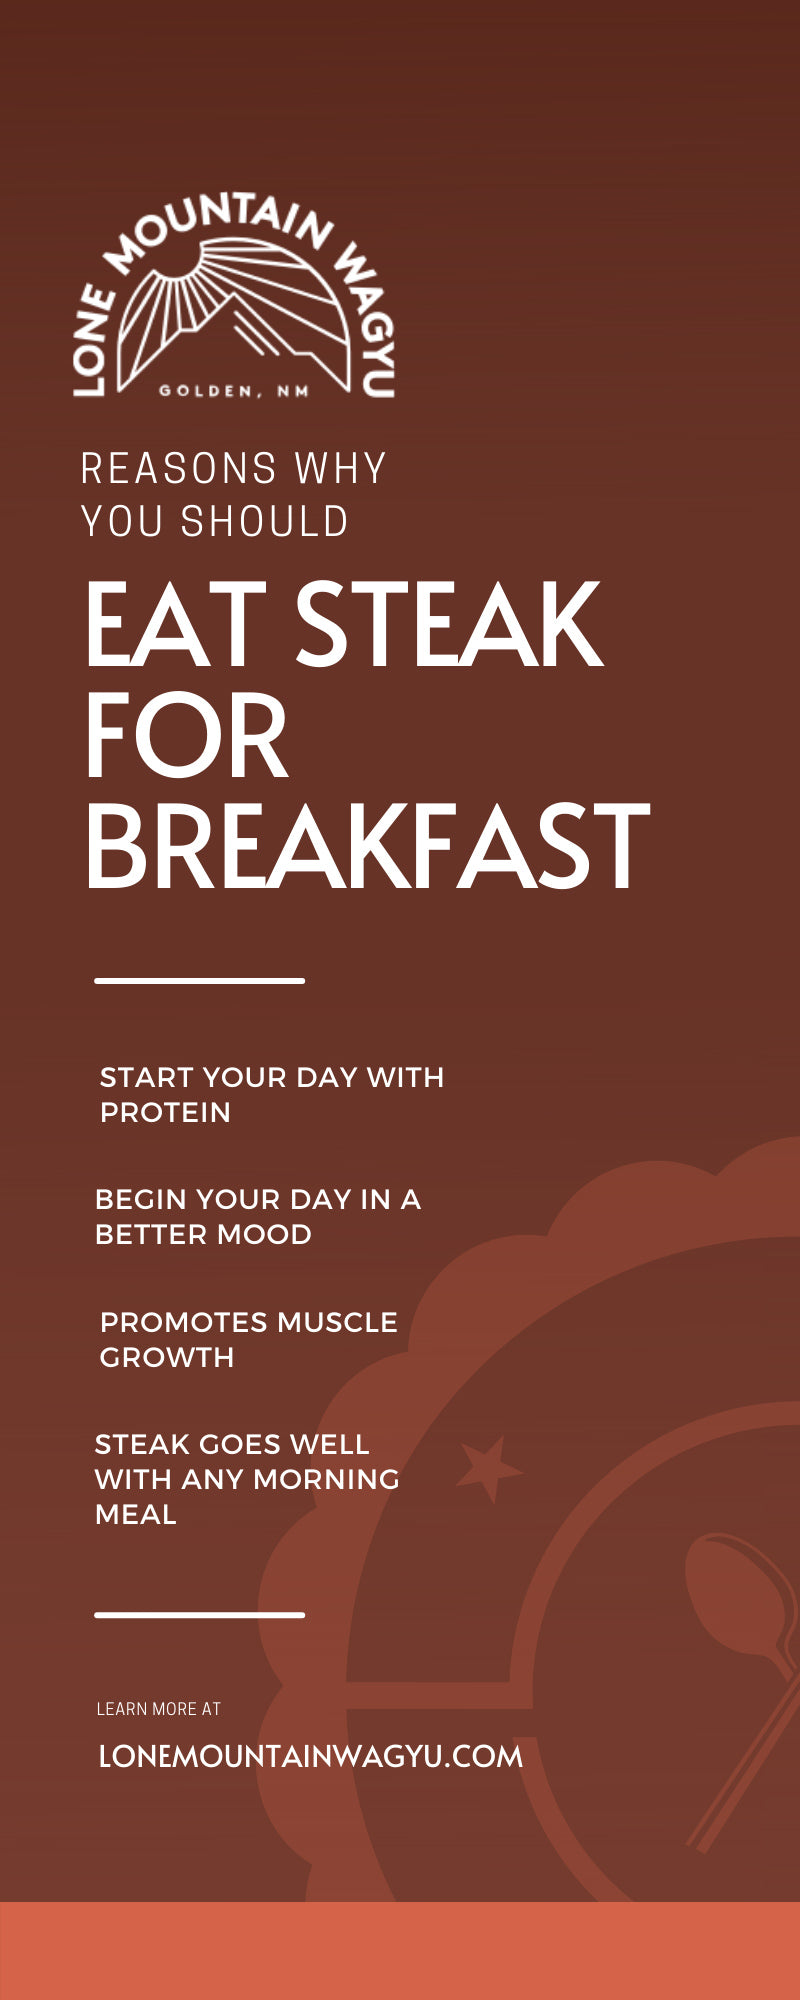 Reasons Why You Should Eat Steak for Breakfast